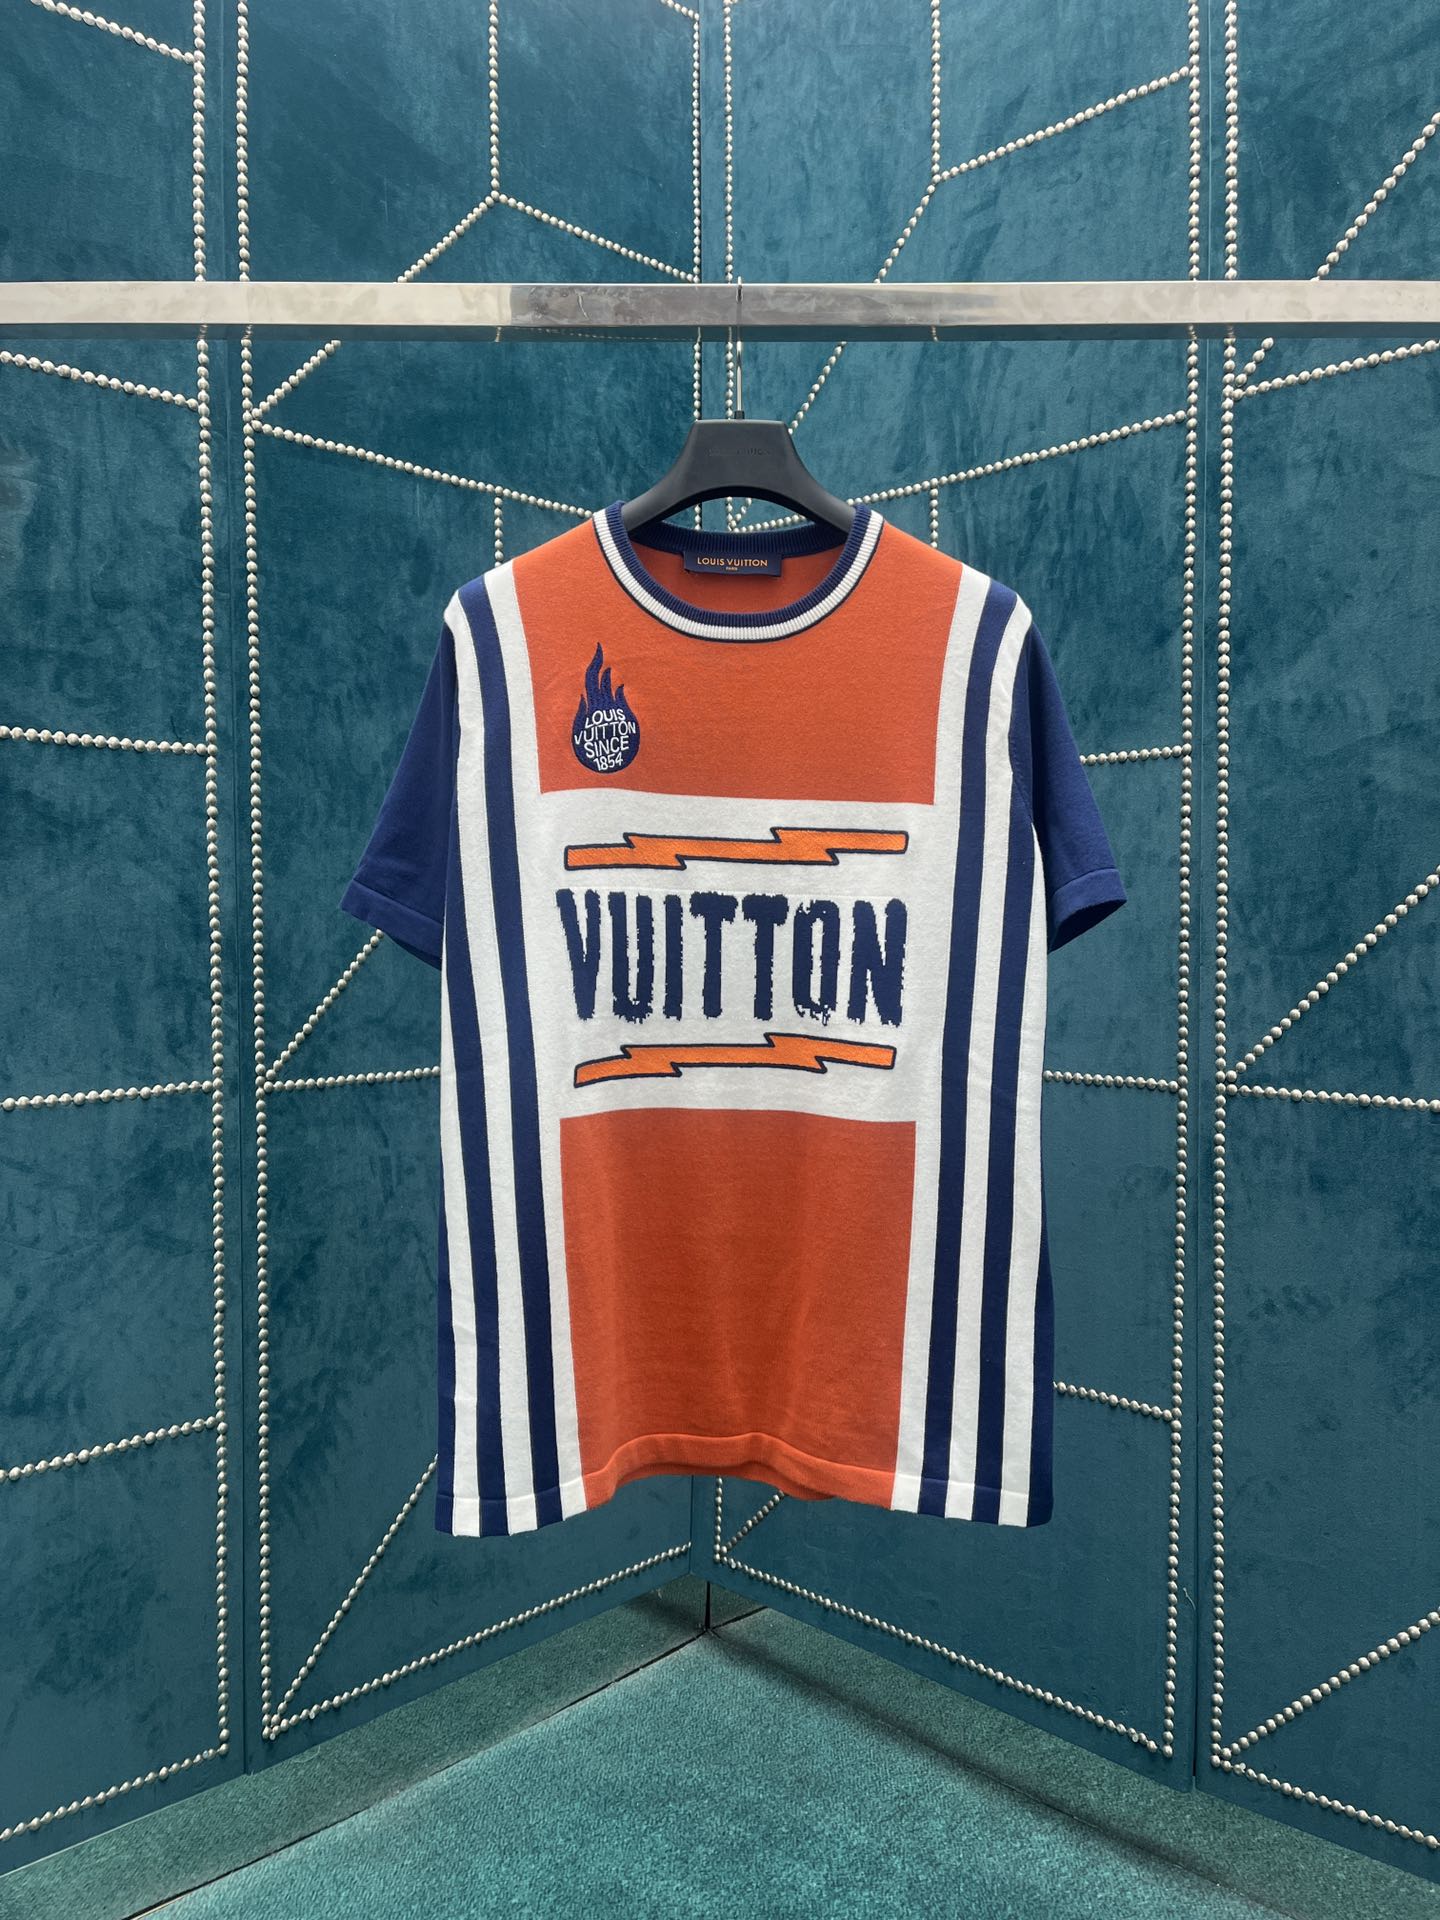 Louis Vuitton Kleding T-Shirt Blauw Oranje Borduurwerk Unisex Katoen Breien Lentecollectie